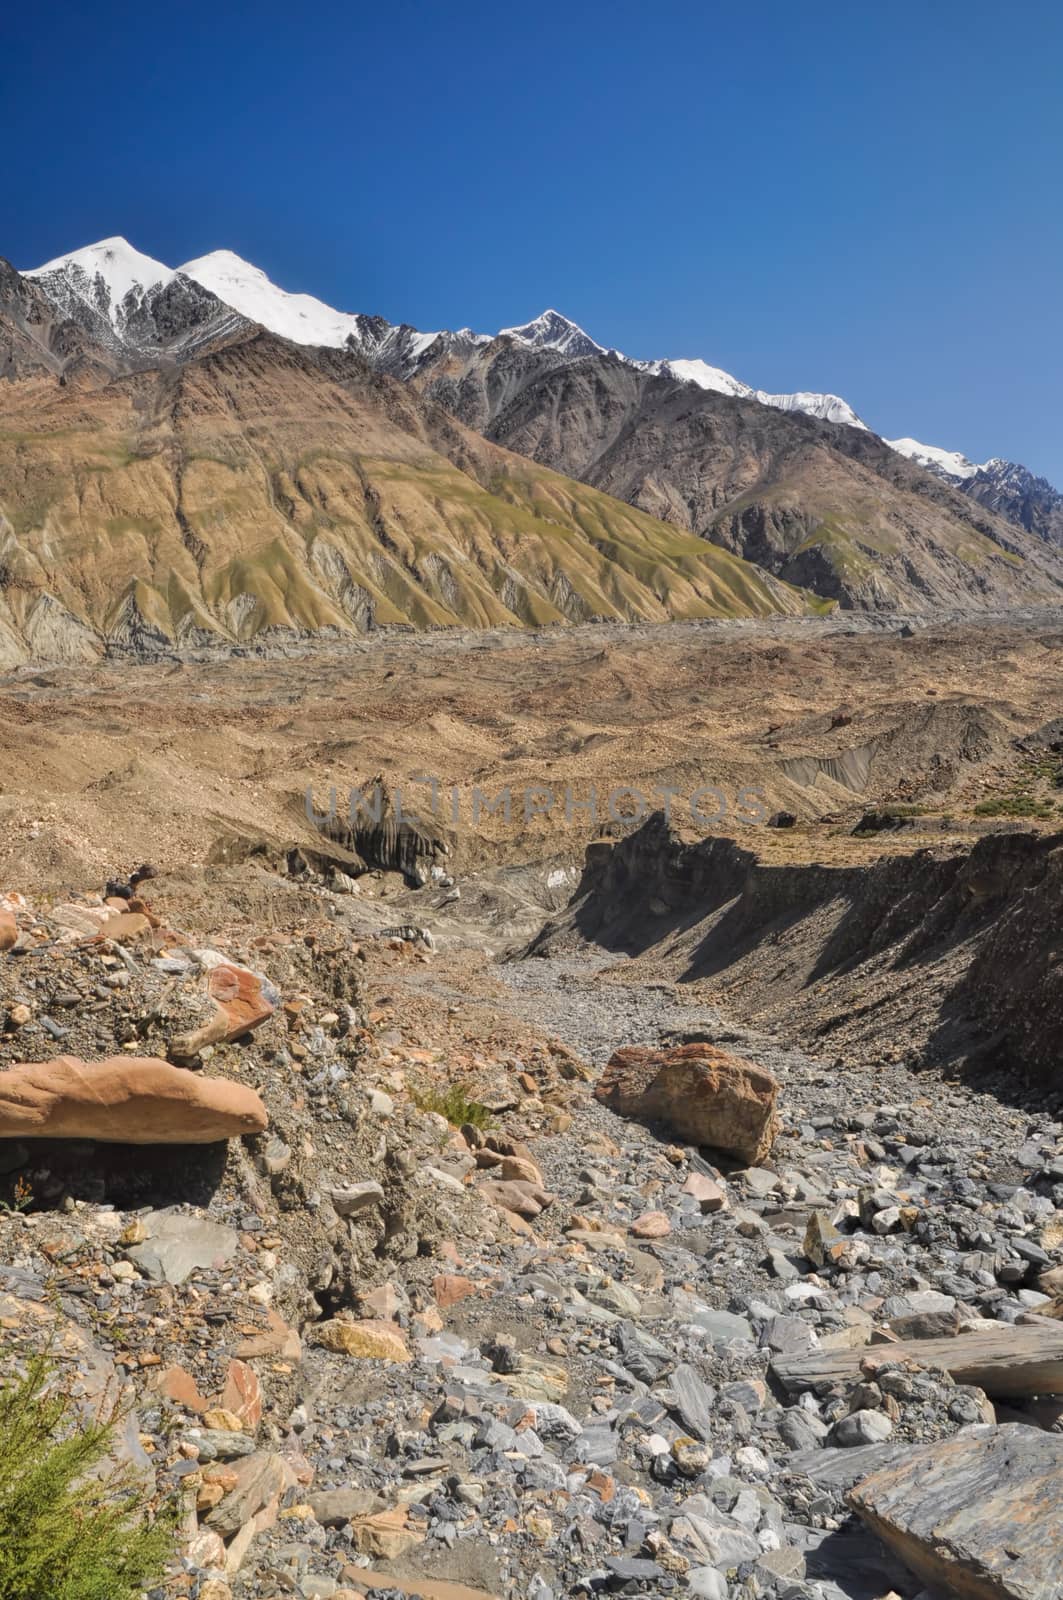 Lower parts of scenic Engilchek glacier in Kyrgyzstan